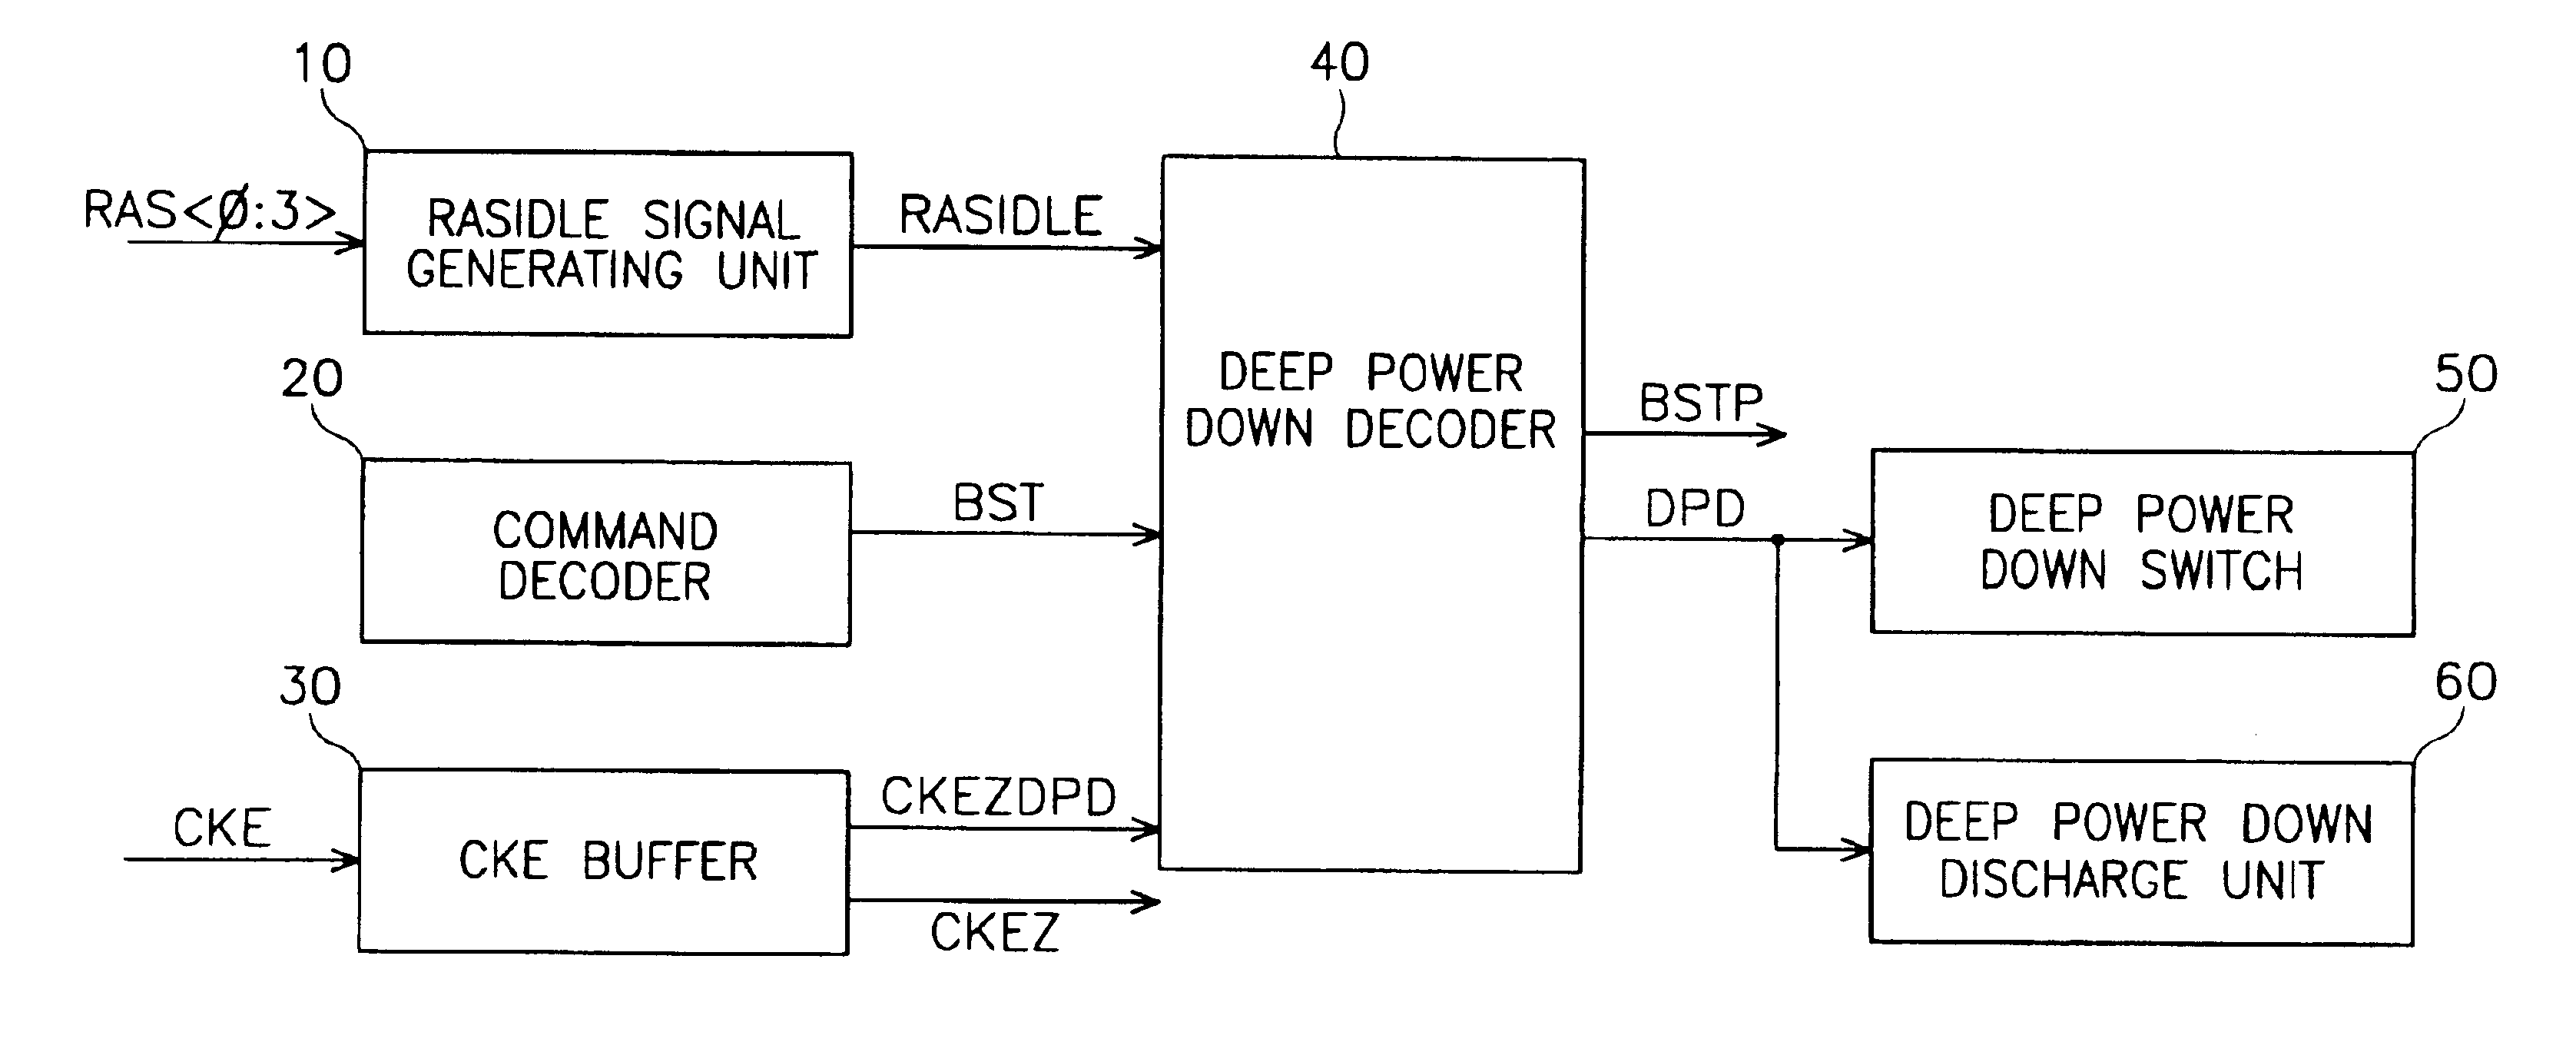 Deep power down control circuit